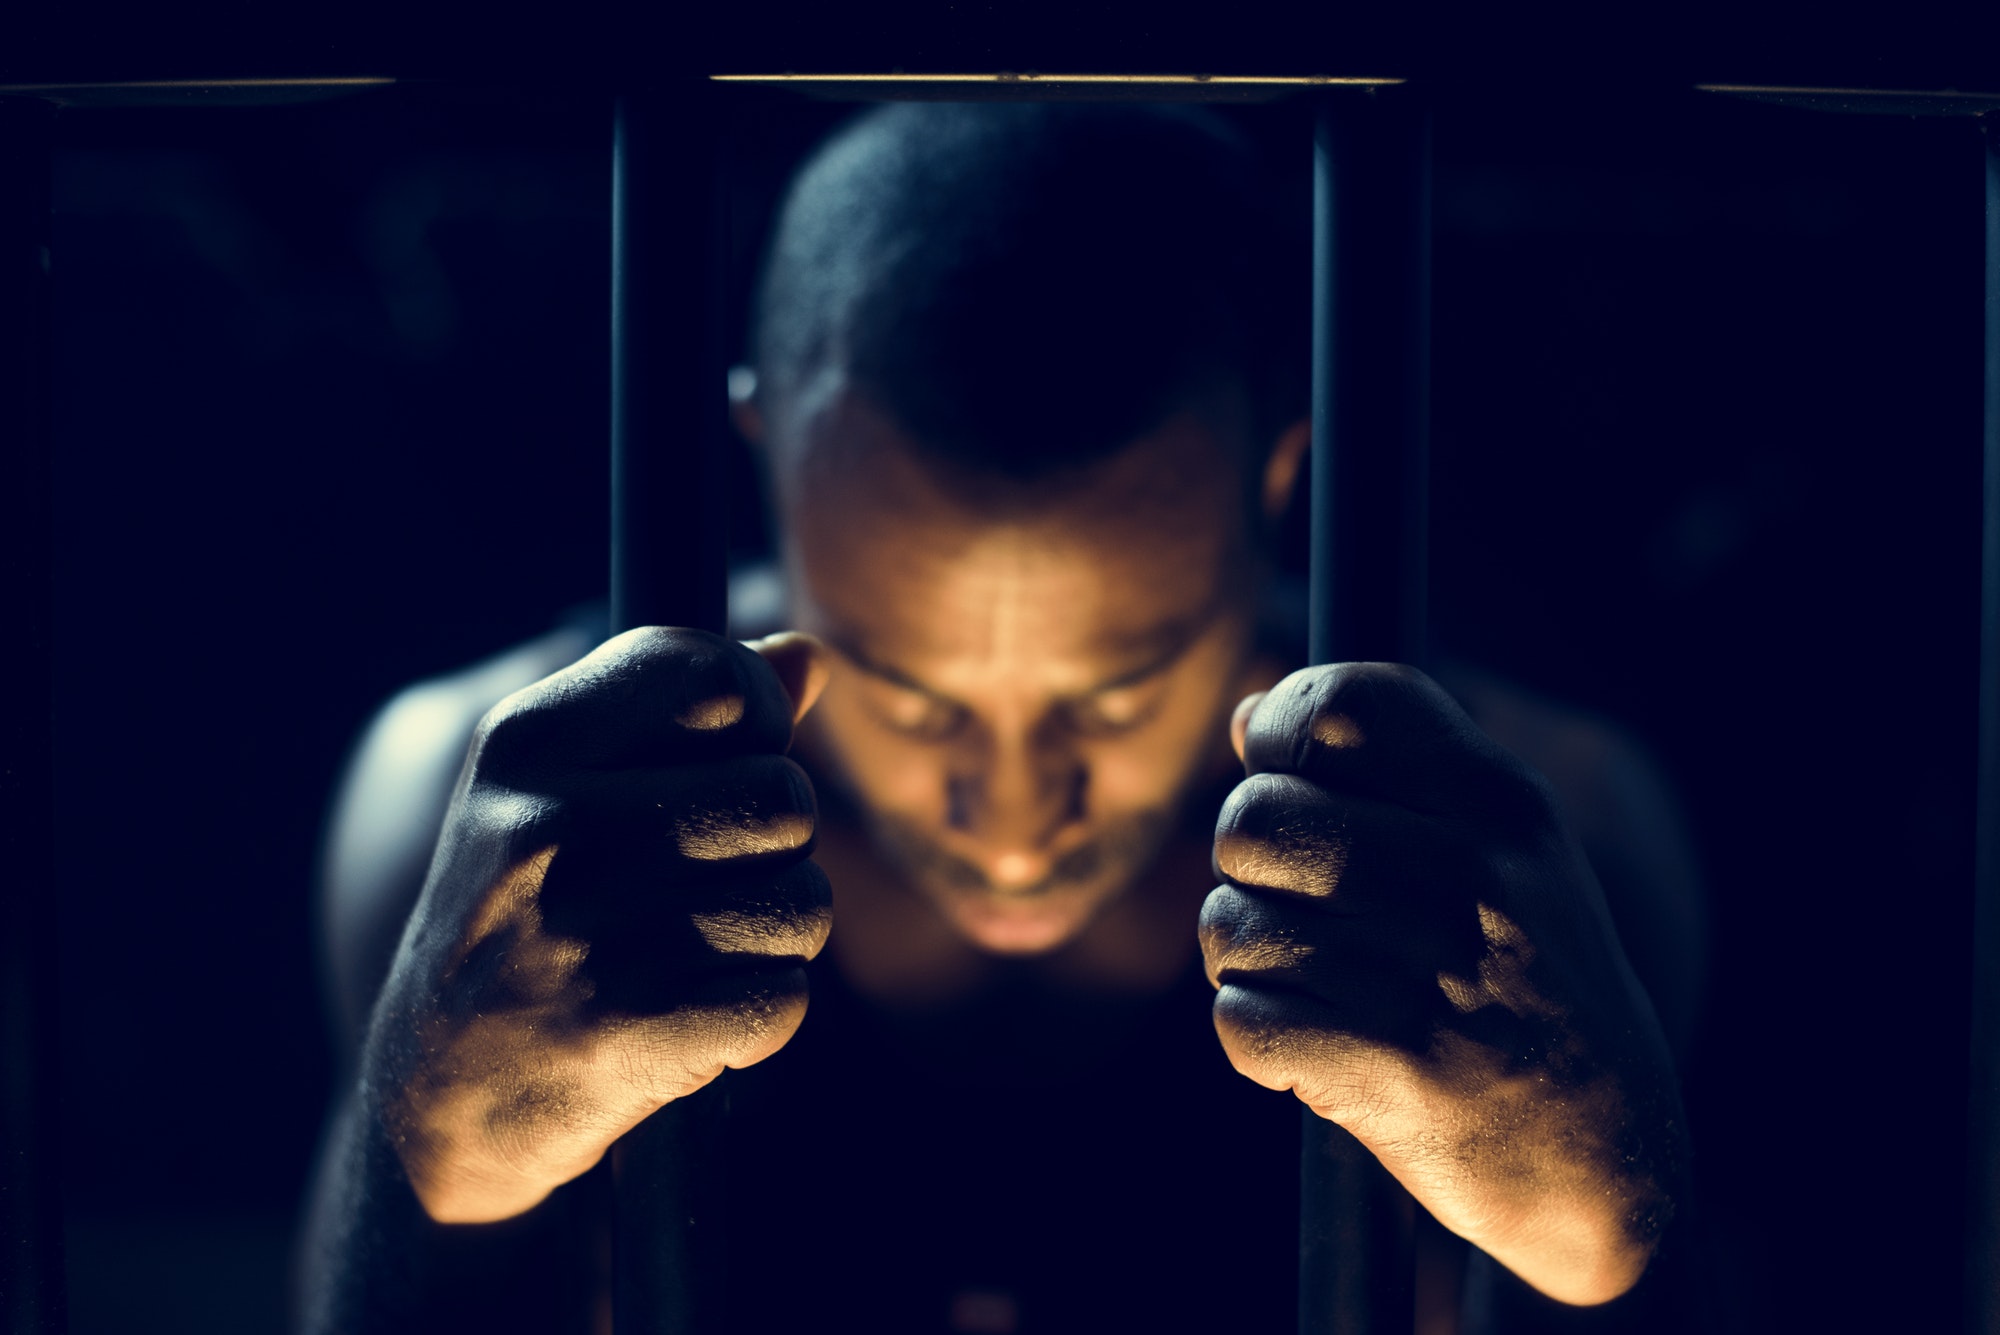 African descent man in prison